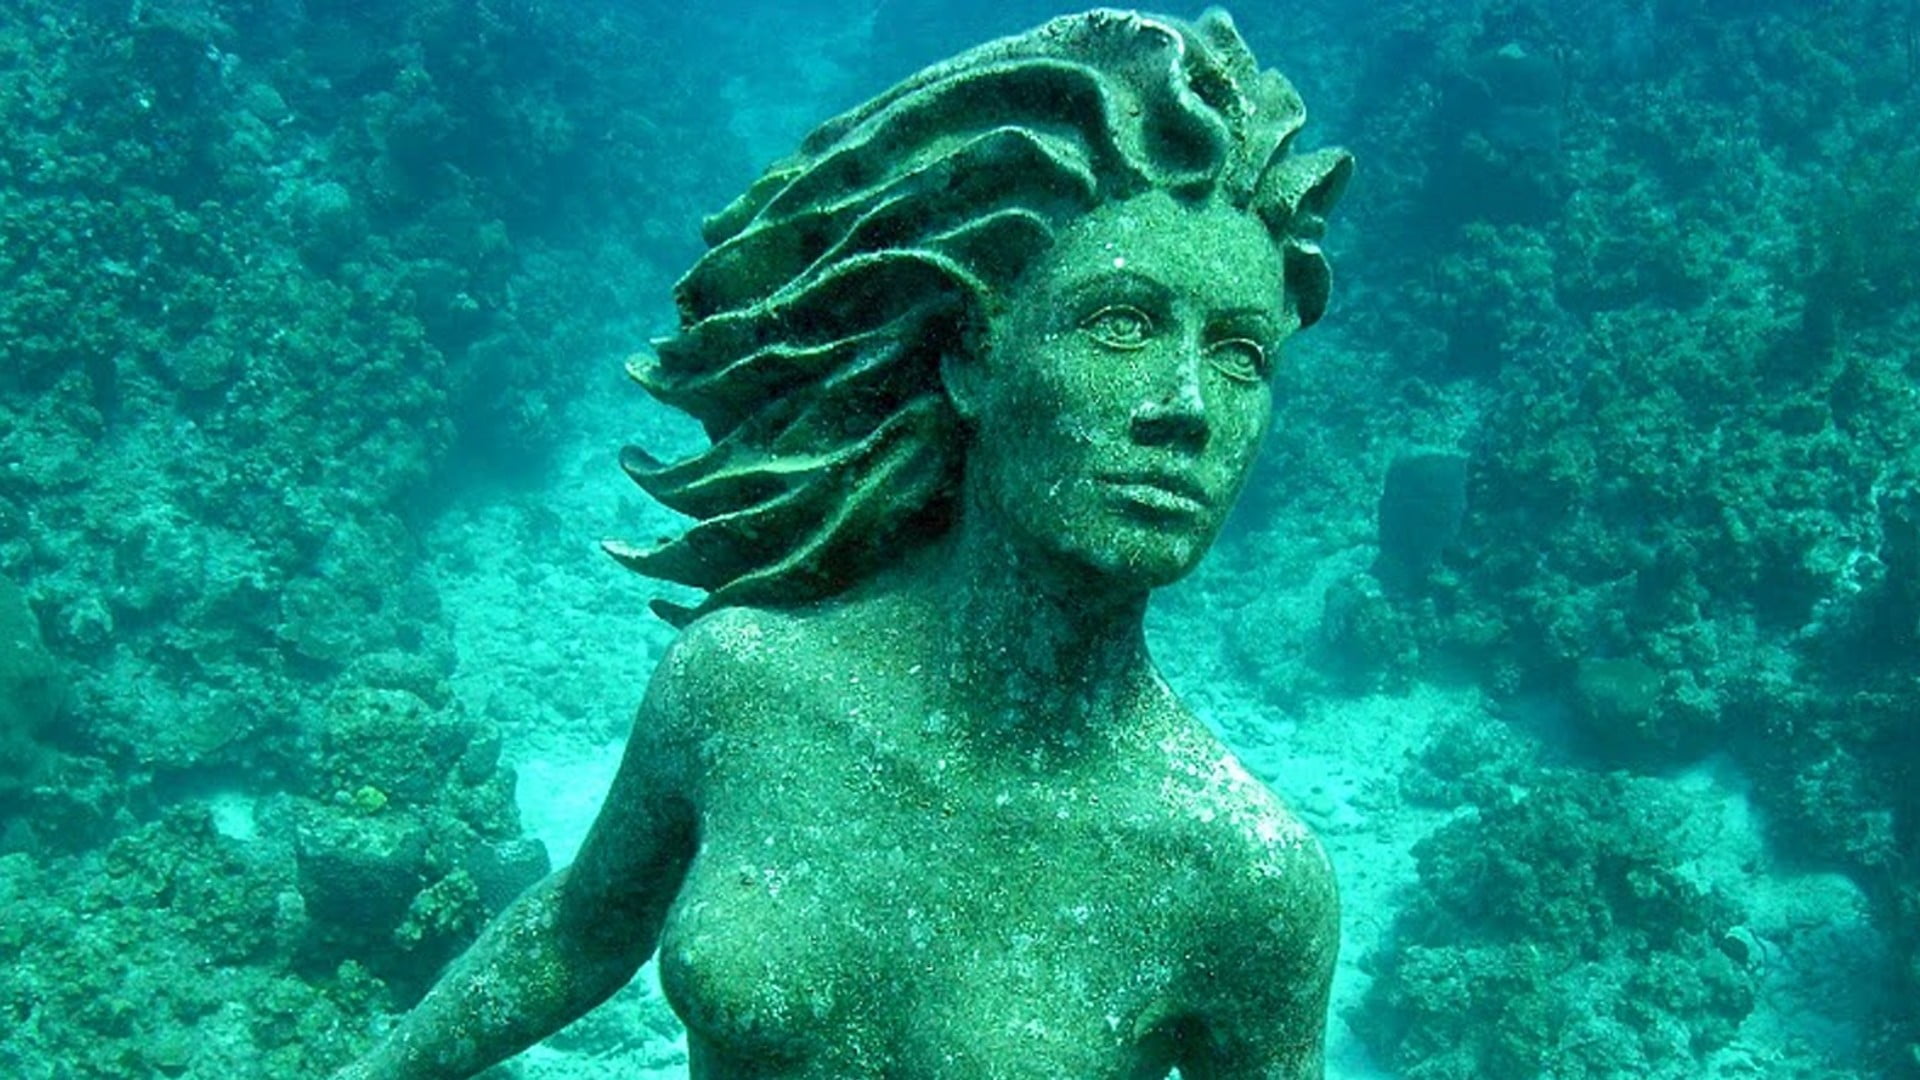 female concrete statue, statue, underwater, mermaids, sea